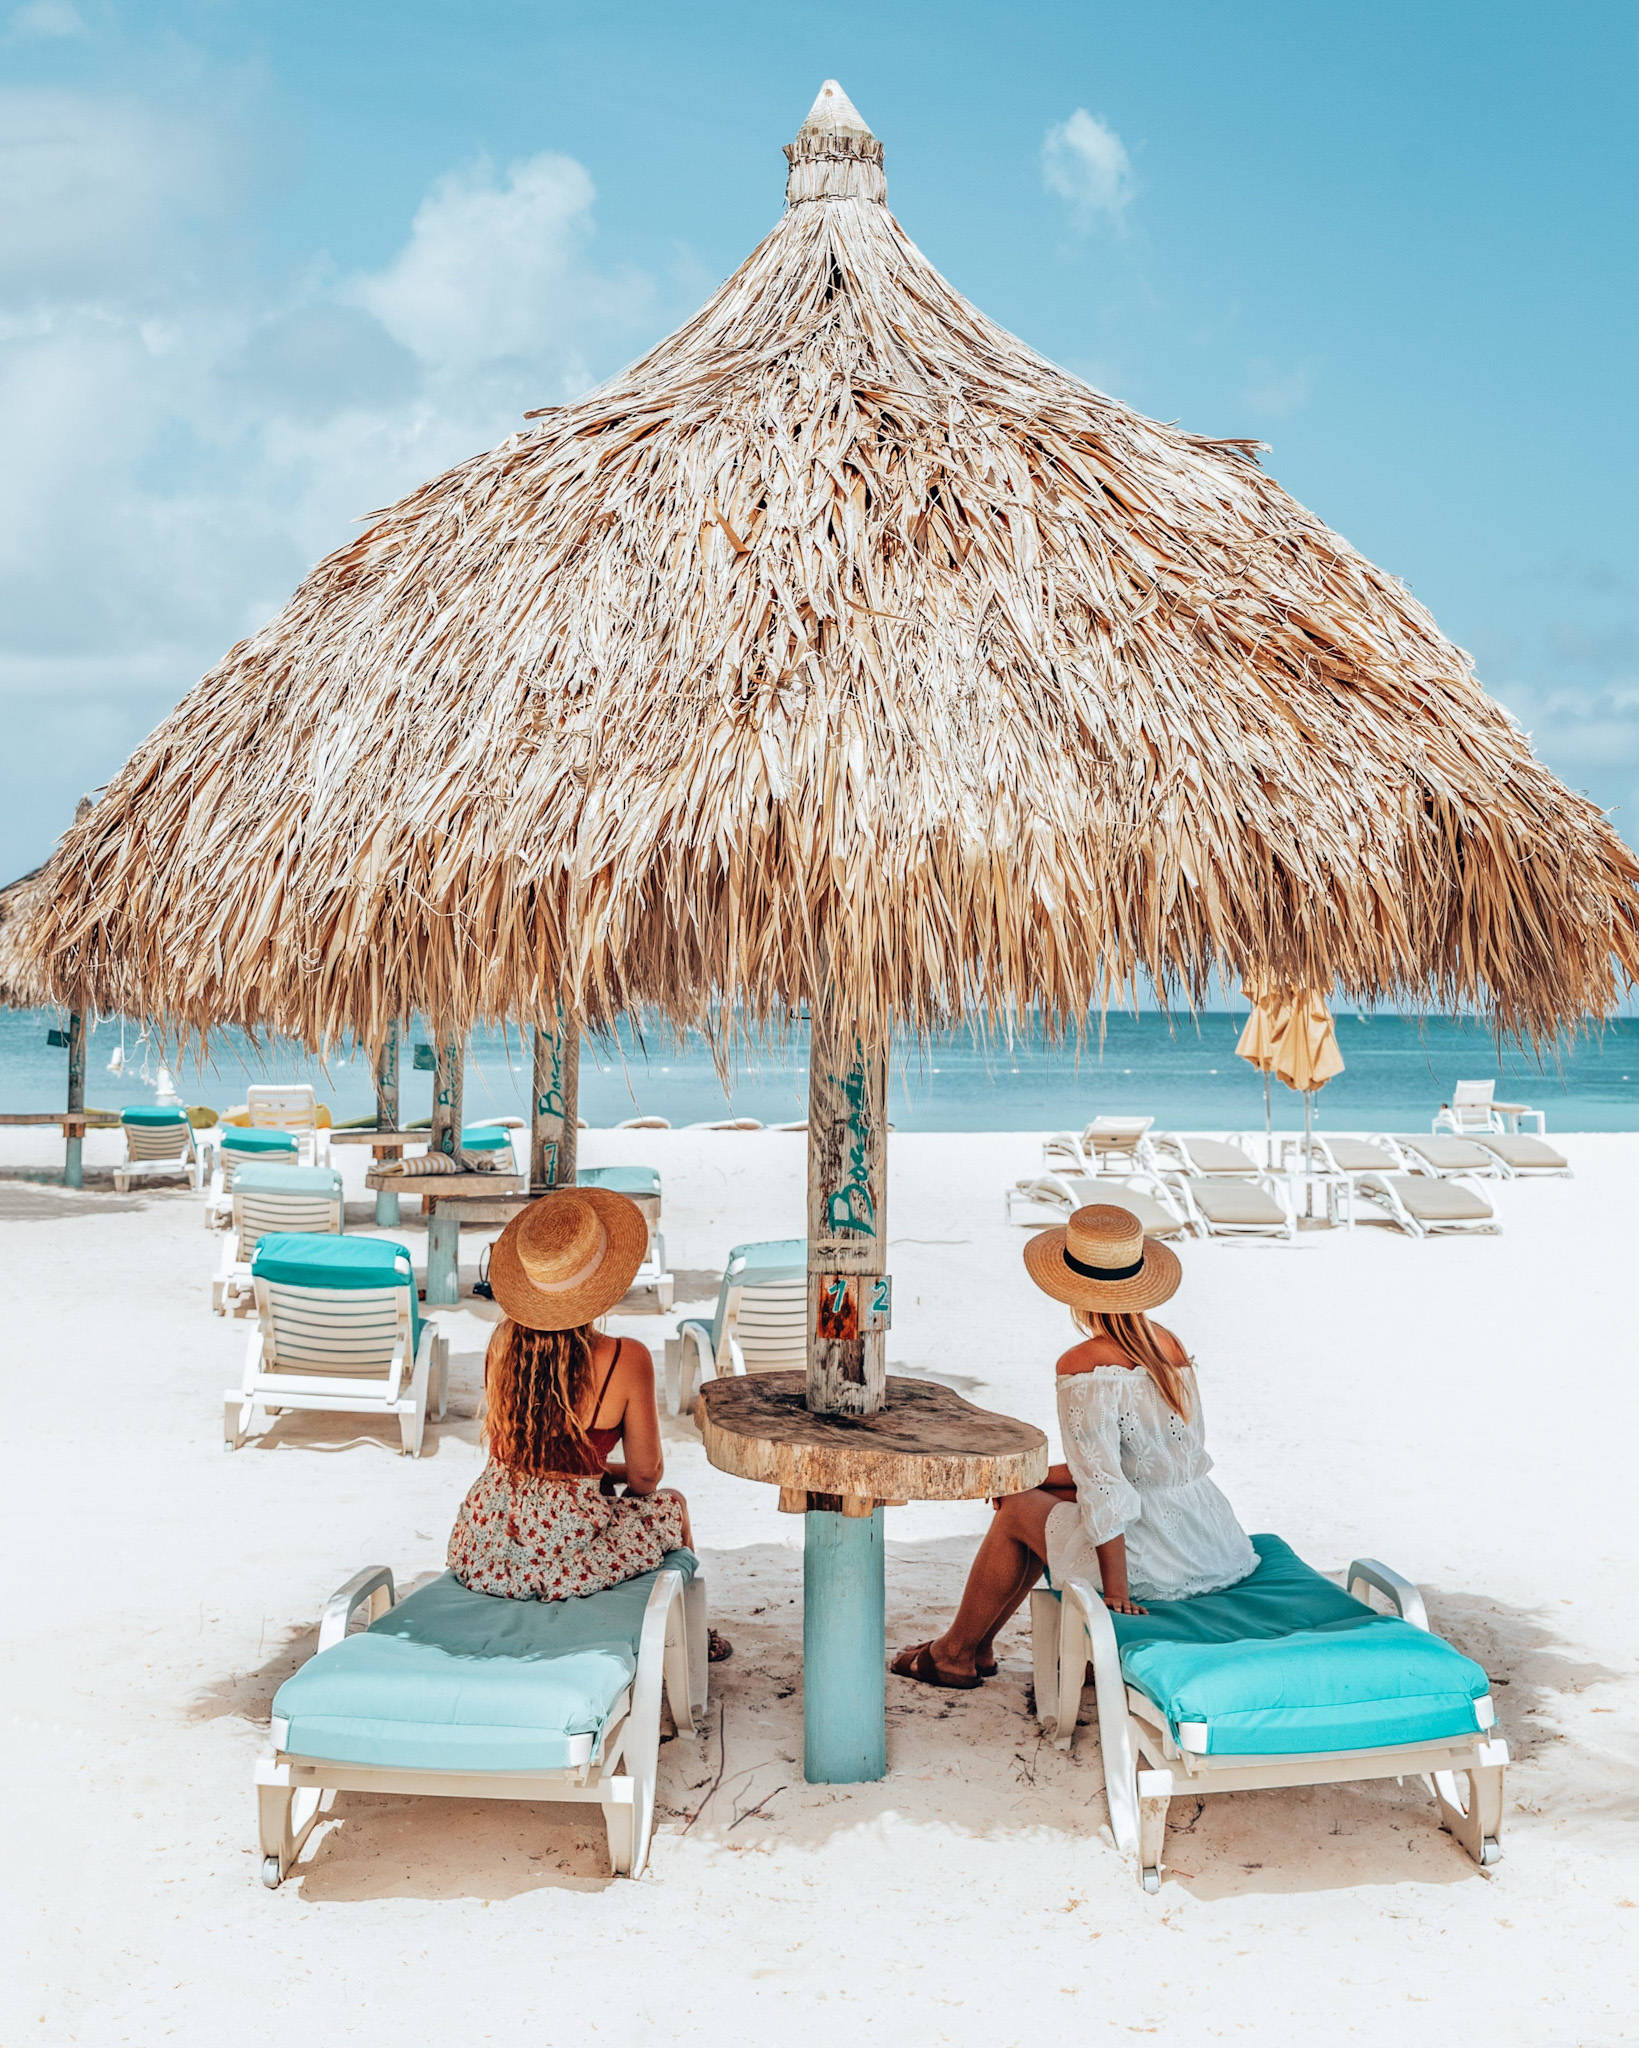 Vakantie Aruba